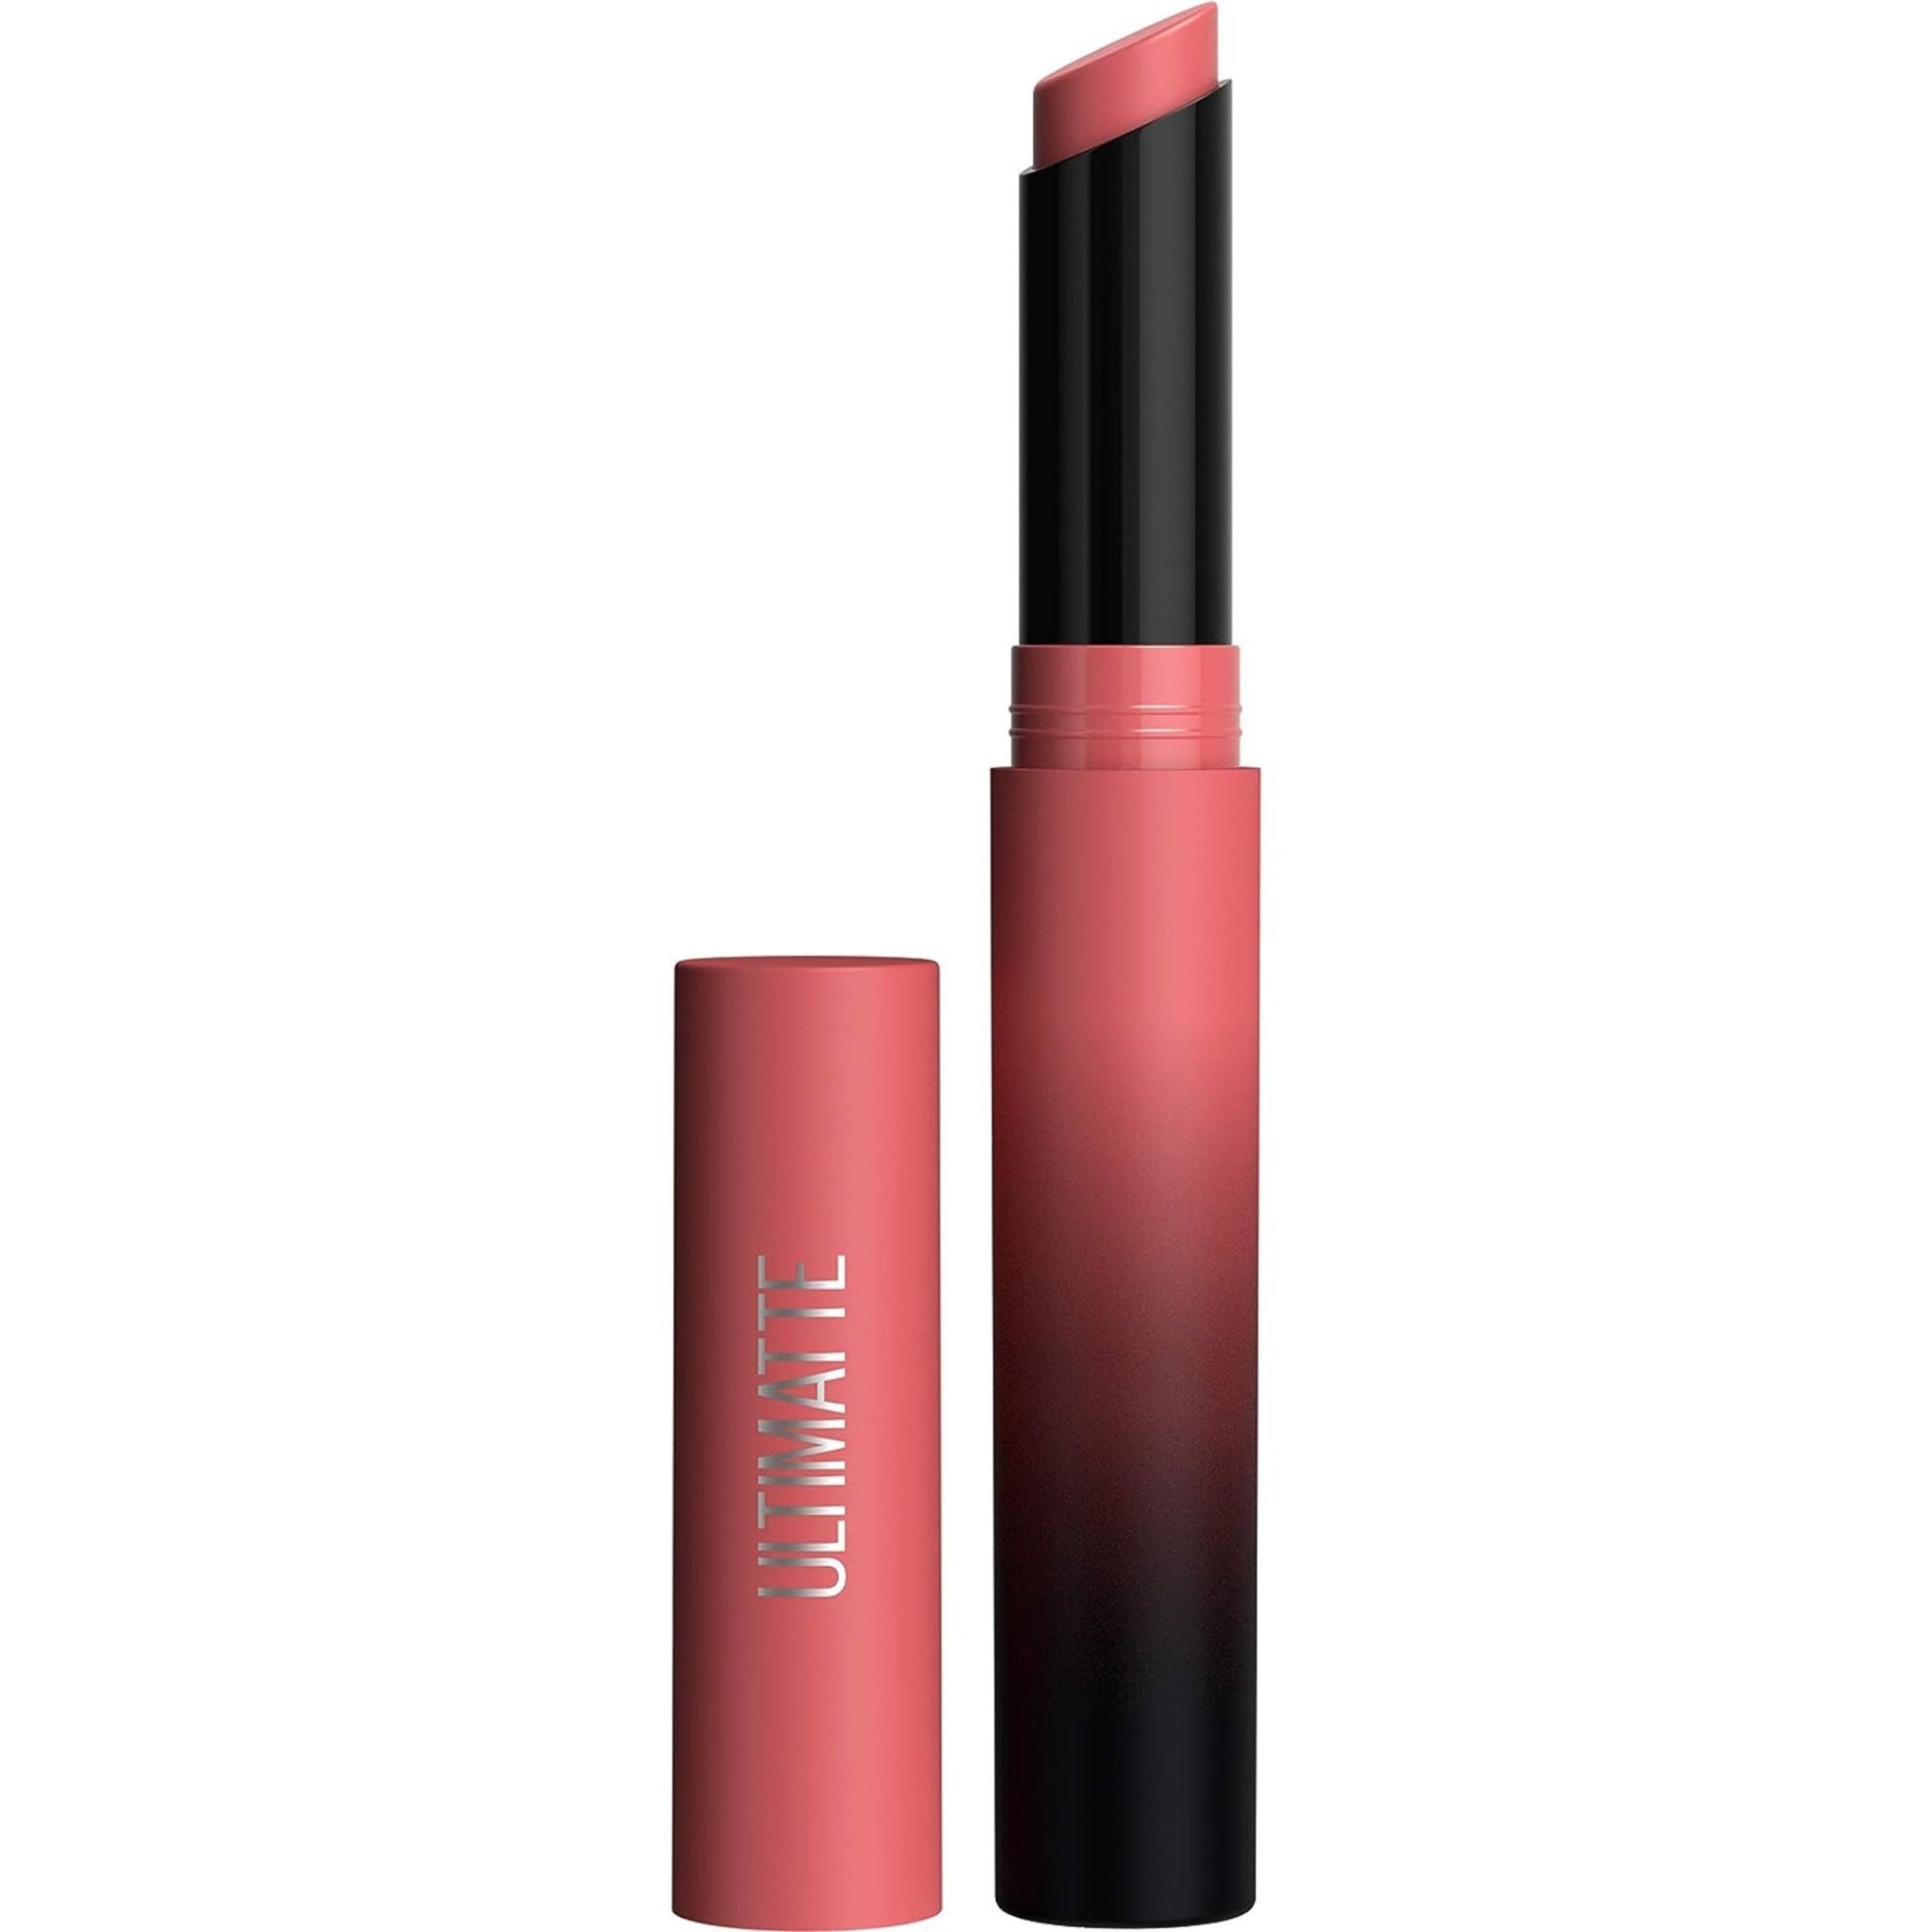 New York Color Sensational Ultimatte Slim Lipstick